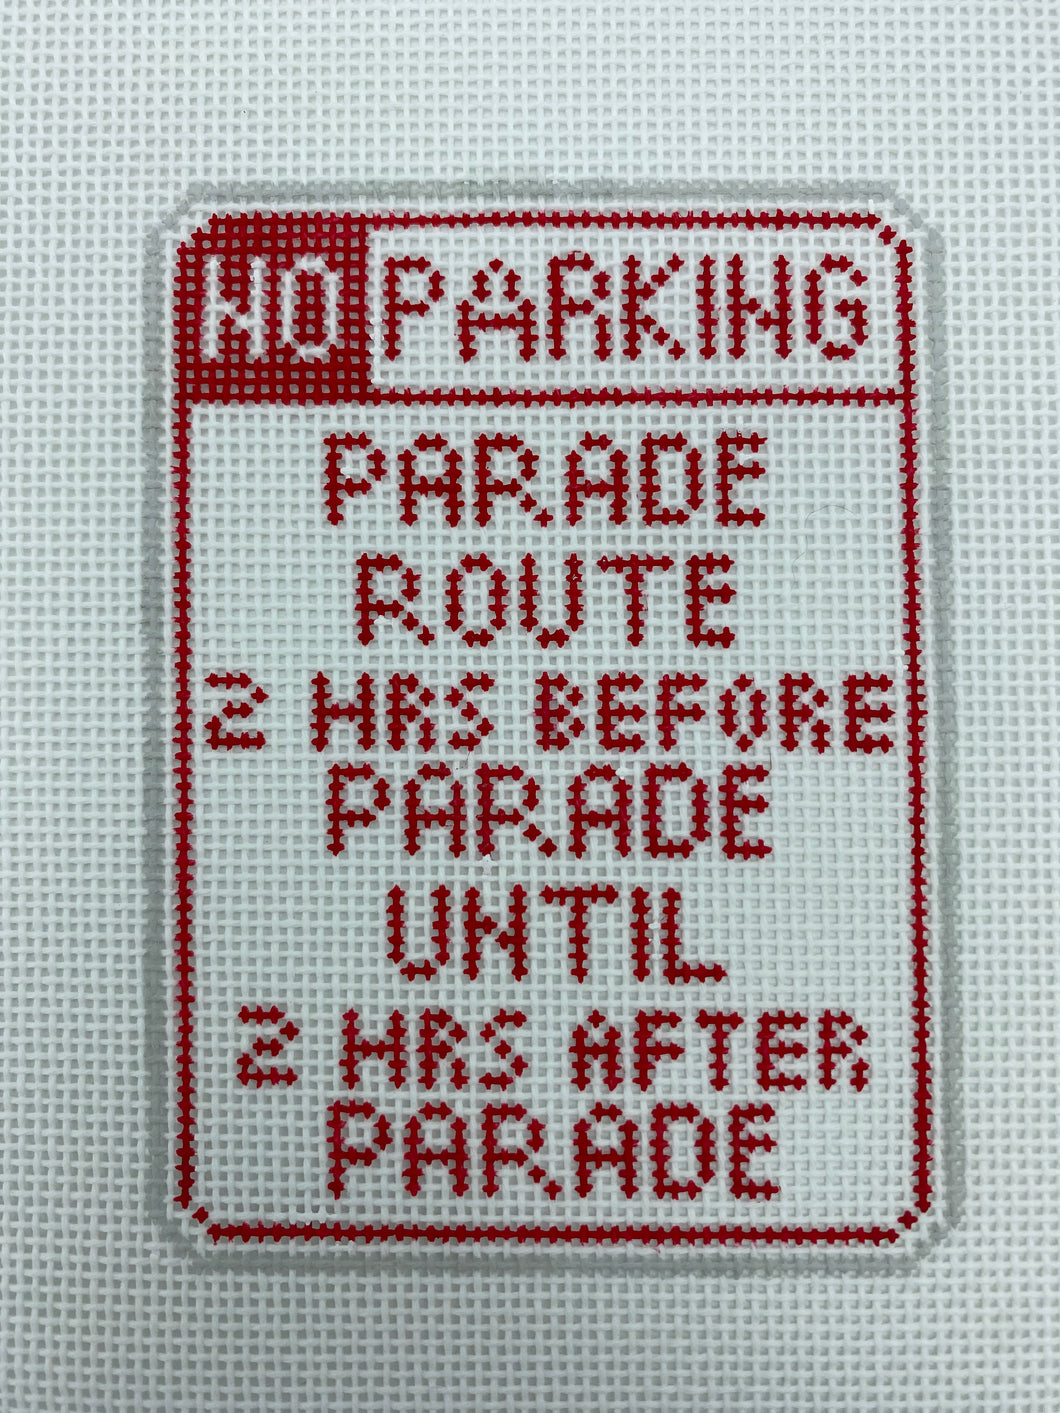 Parade Route NO Parking